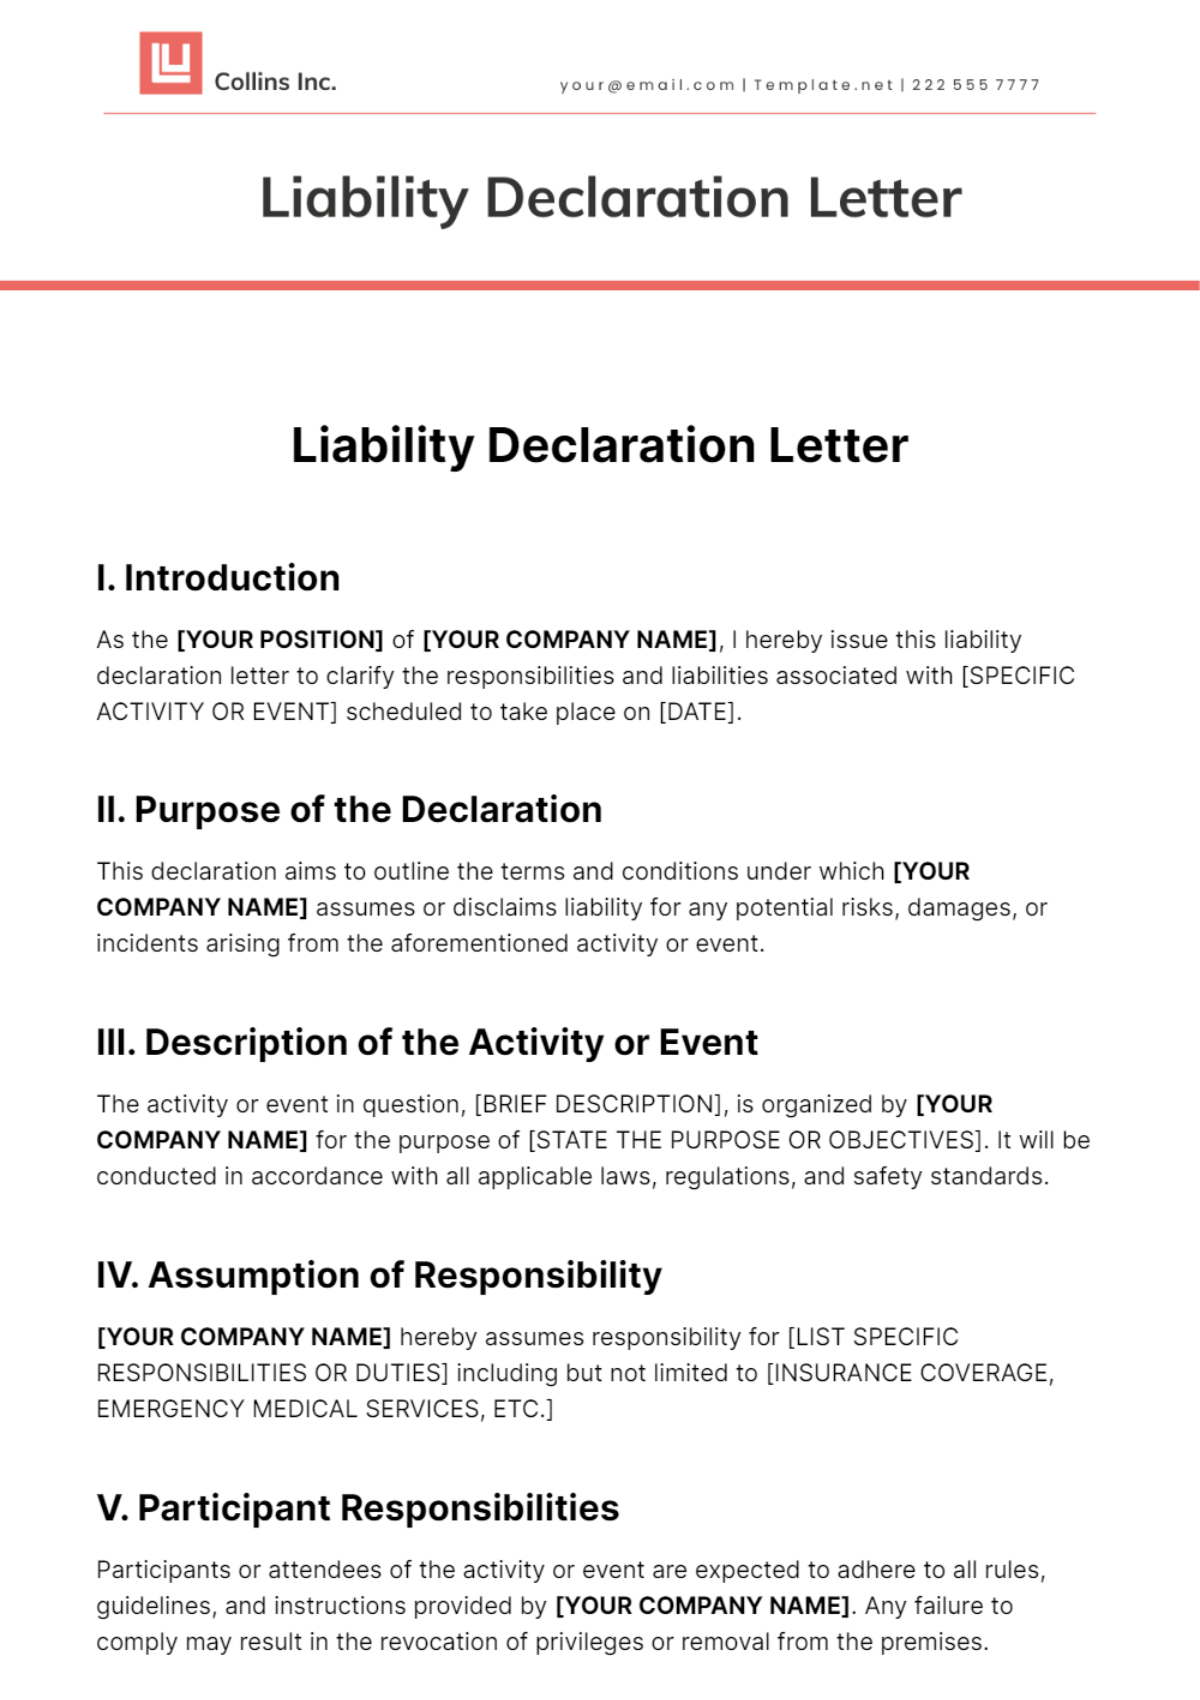 Free Liability Declaration Letter Template